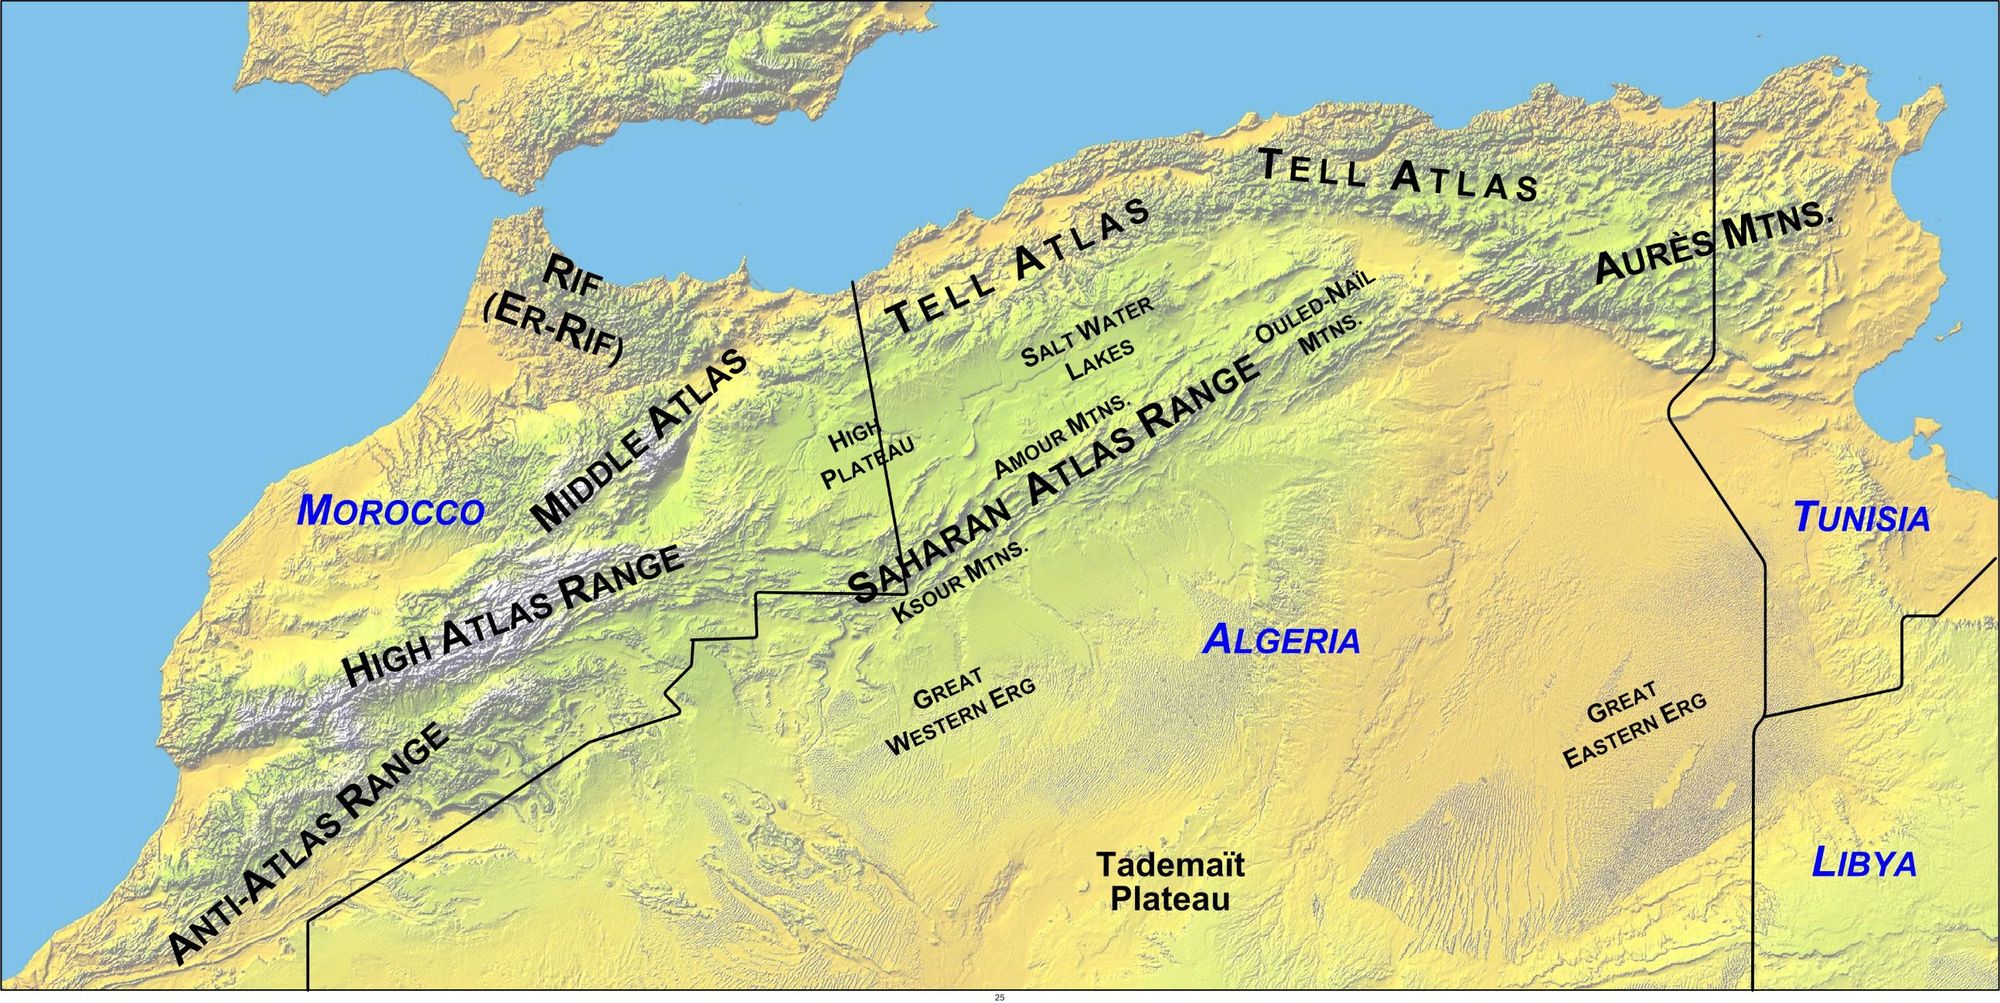 Atlas mountains Map